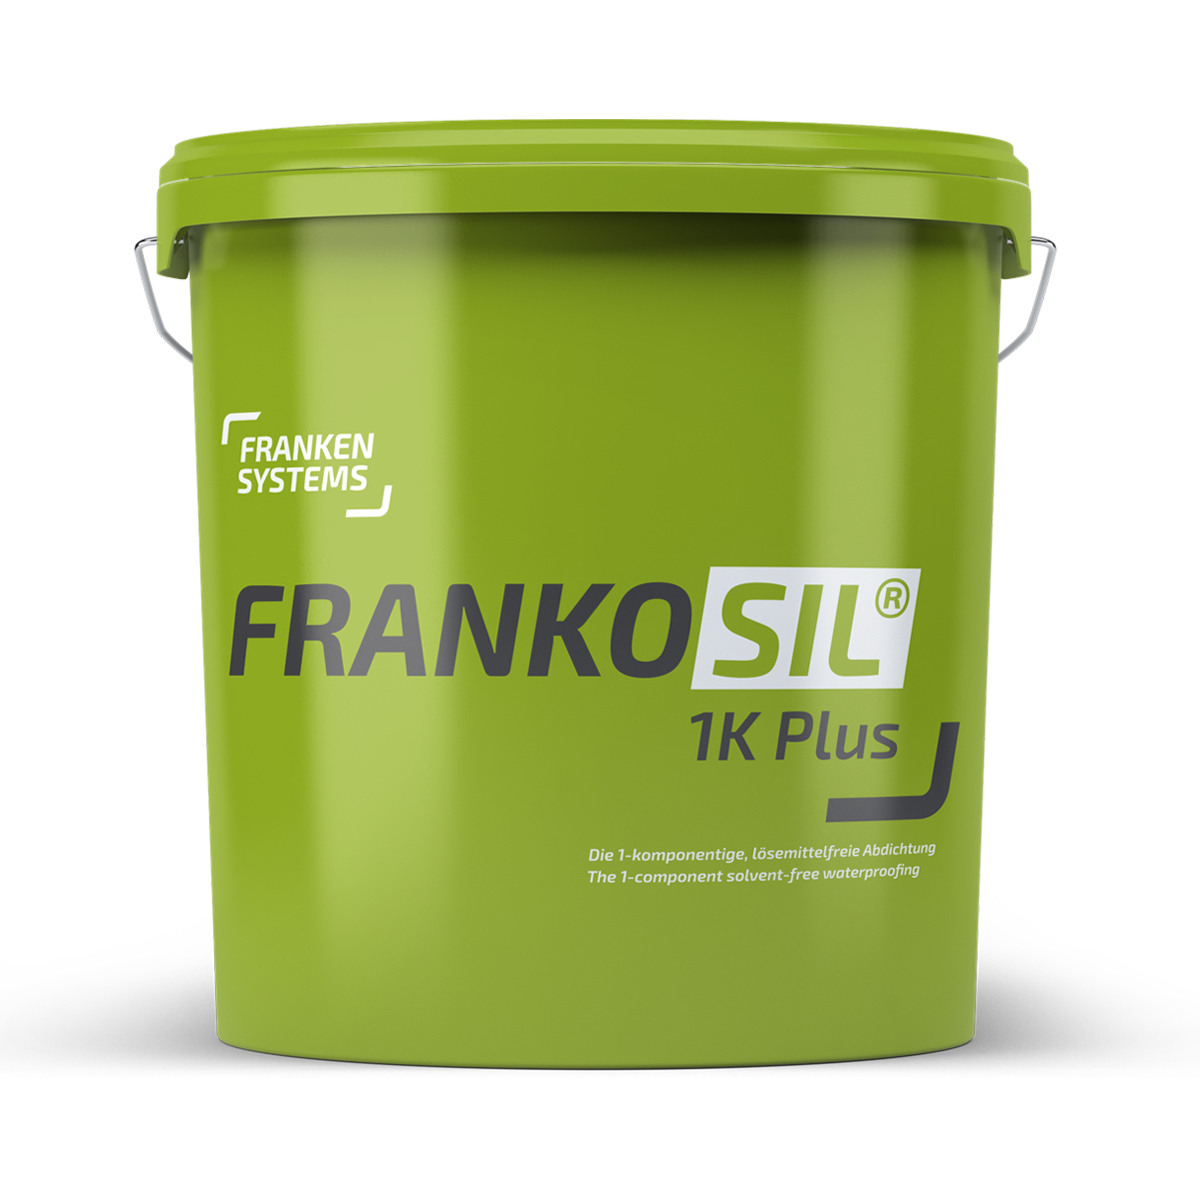 Frankosil 1K Plus Abdichtung, silbergrau 6 kg Kunststoffgebinde, B91-701-E55 - 1 Stk.